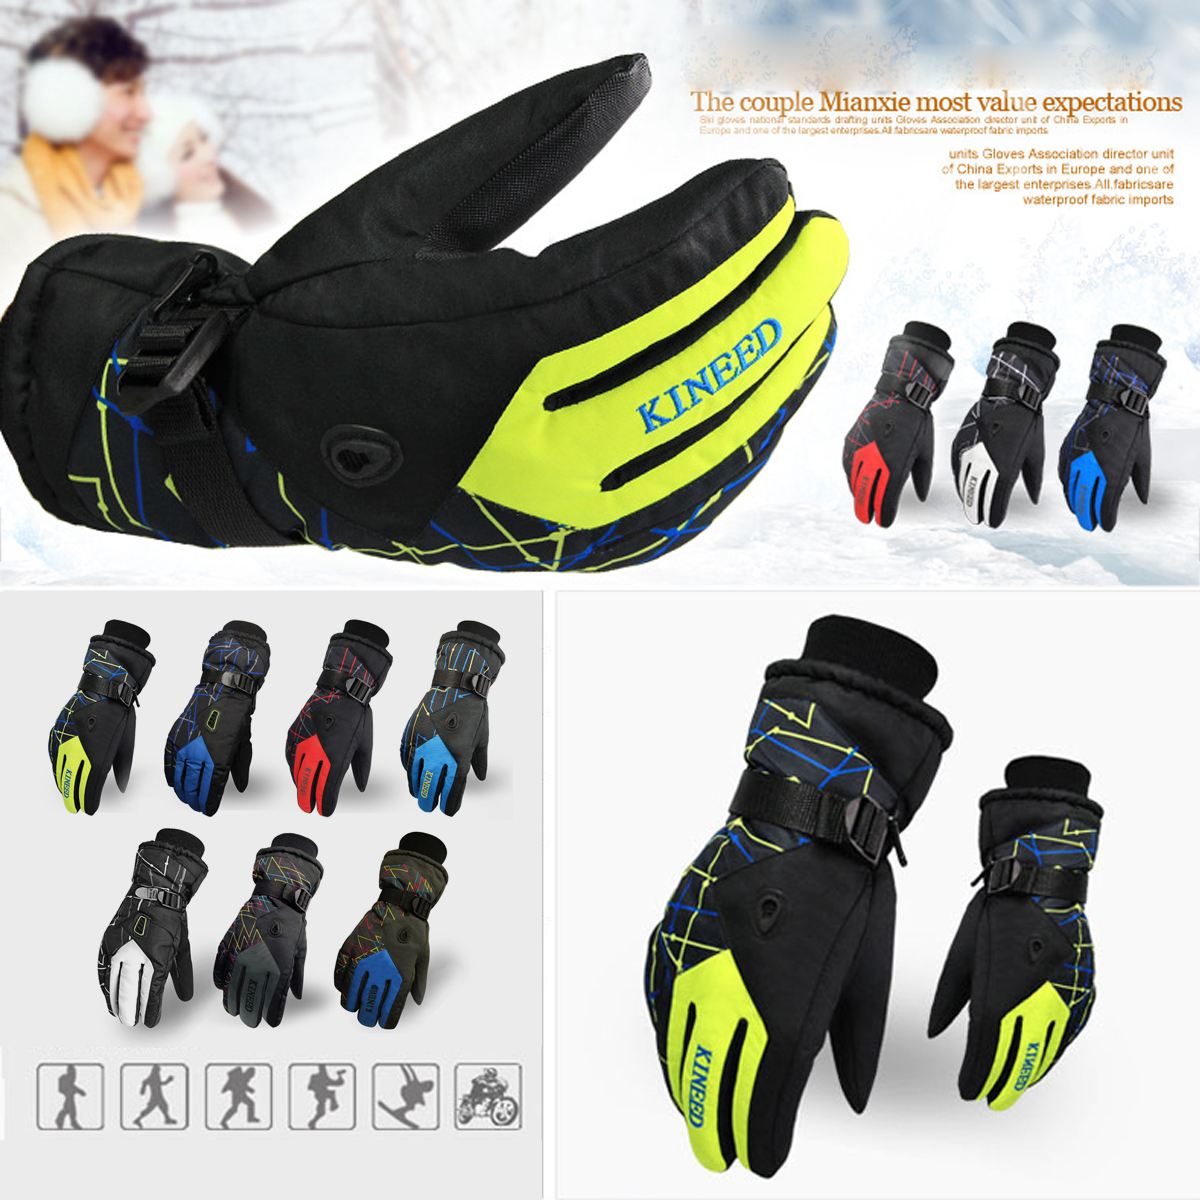 Mens-Winter-Skiing-Gloves-Waterproof-Thermal-Warm-Snowboard-Running-Bike-Ski-Mittens-1620318-1